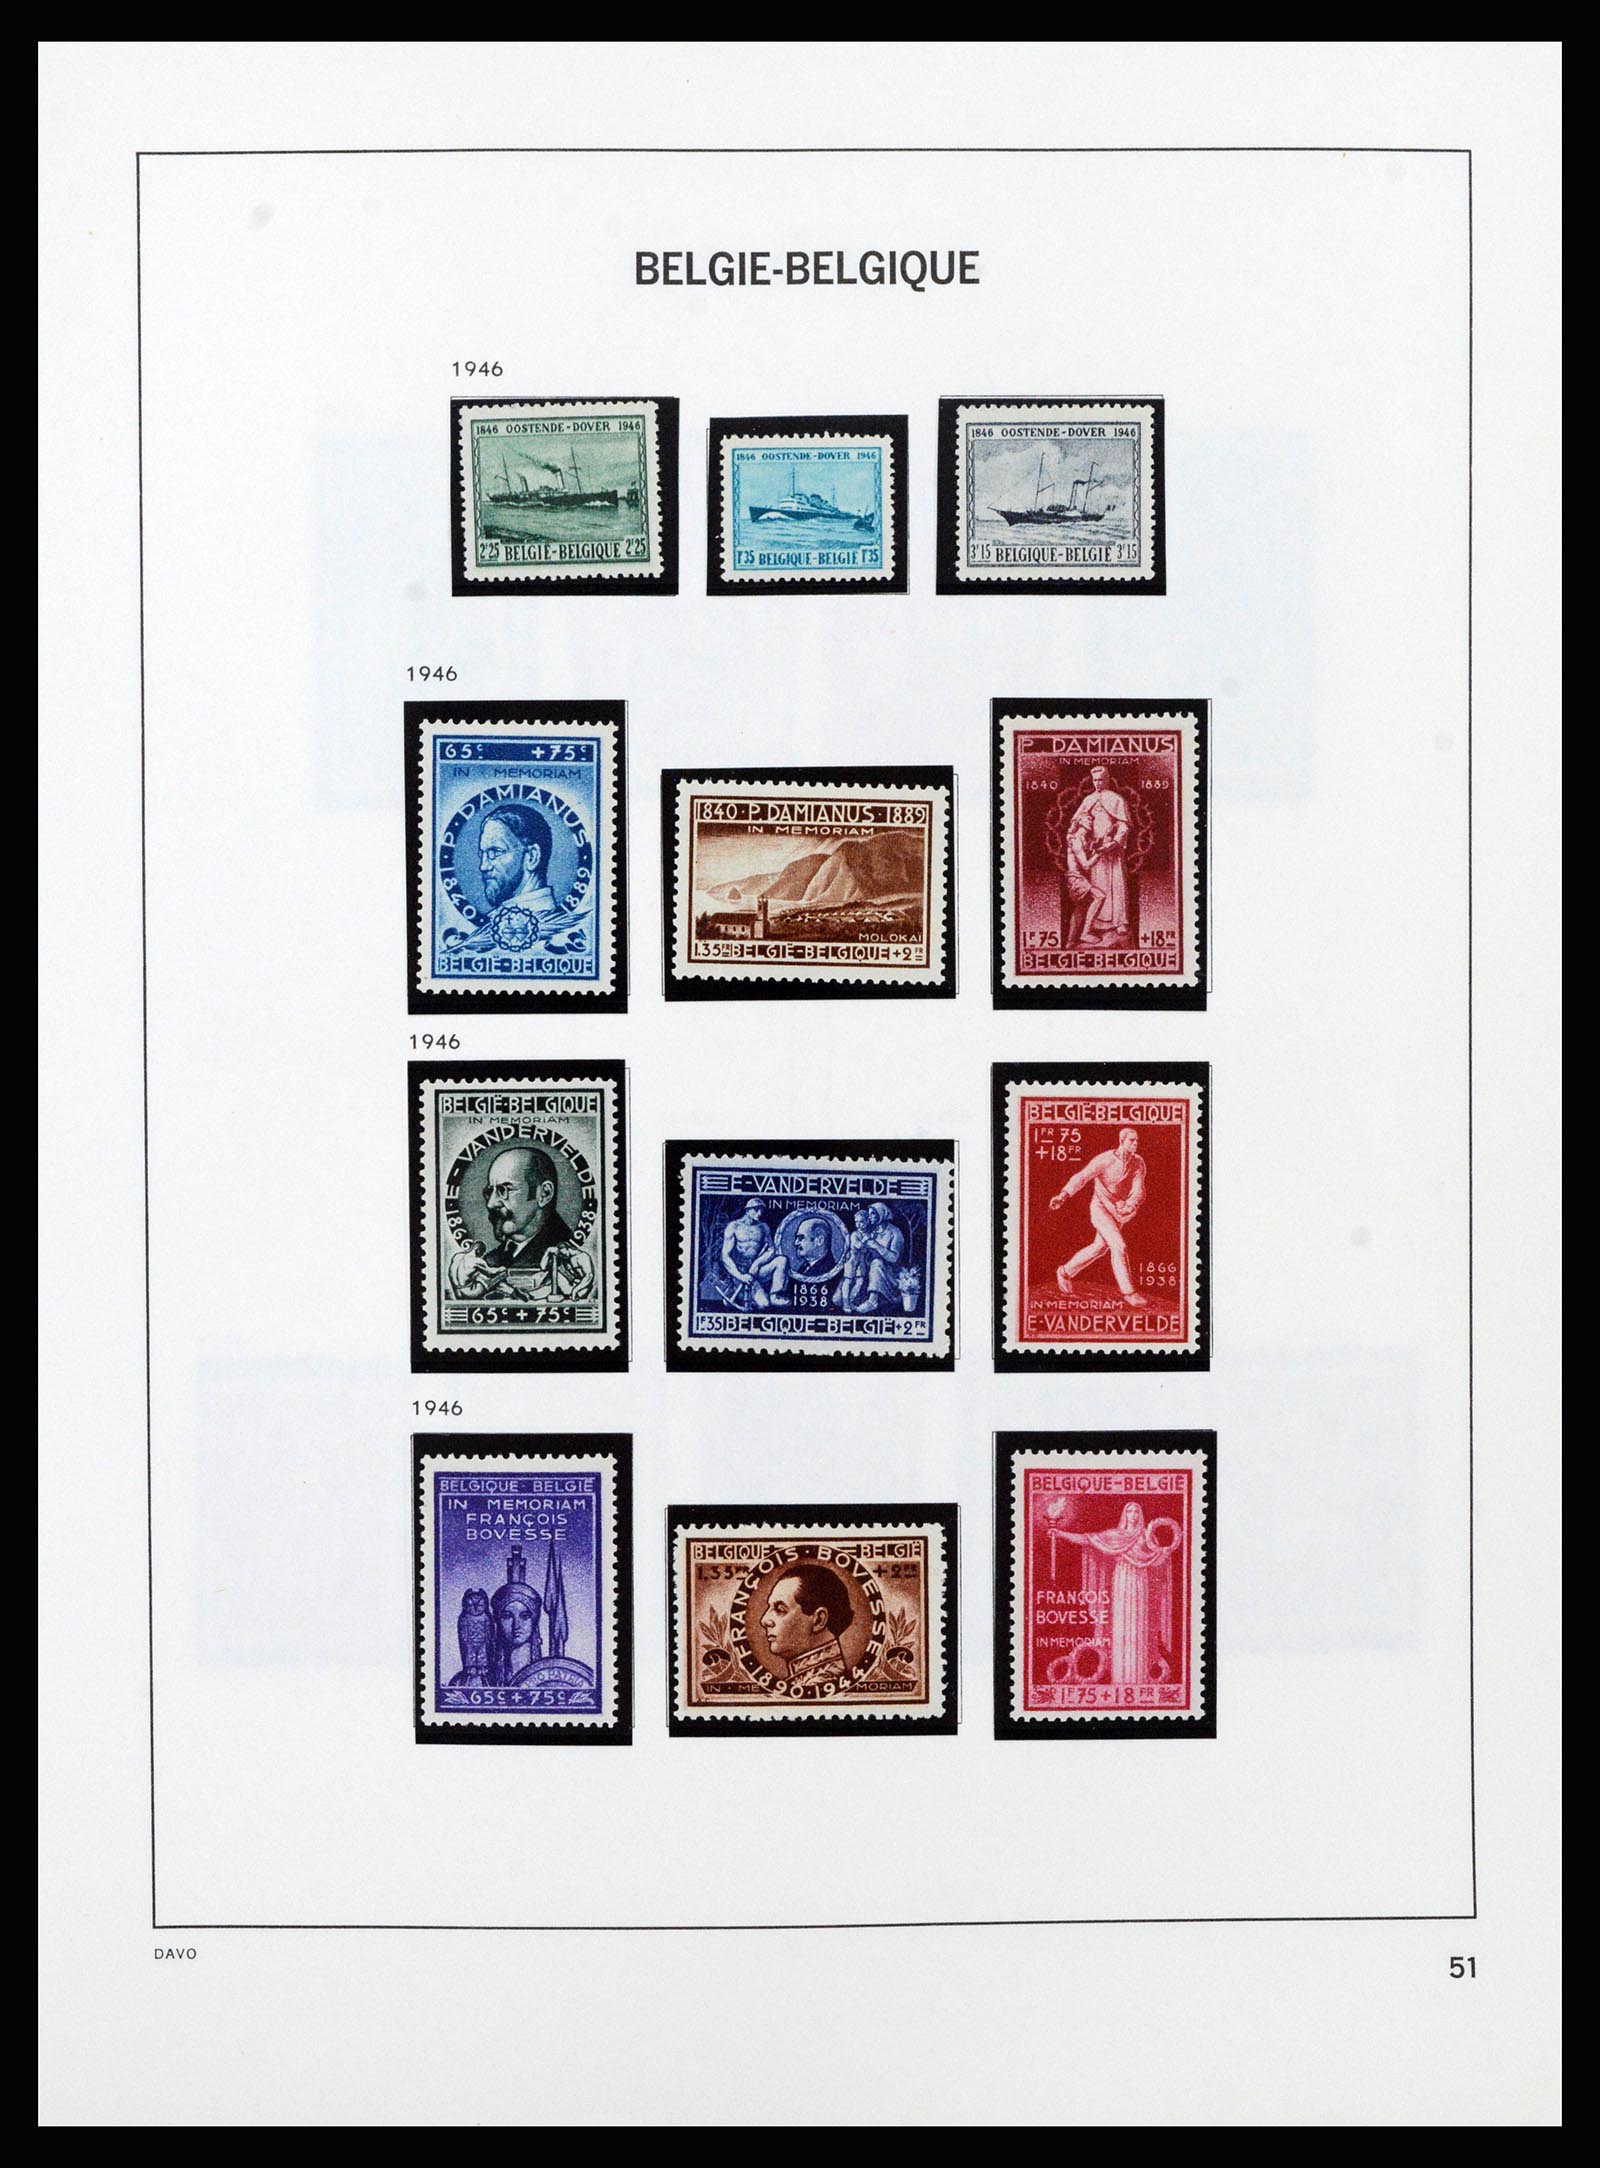 37189 053 - Stamp collection 37189 Belgium 1849-2006.